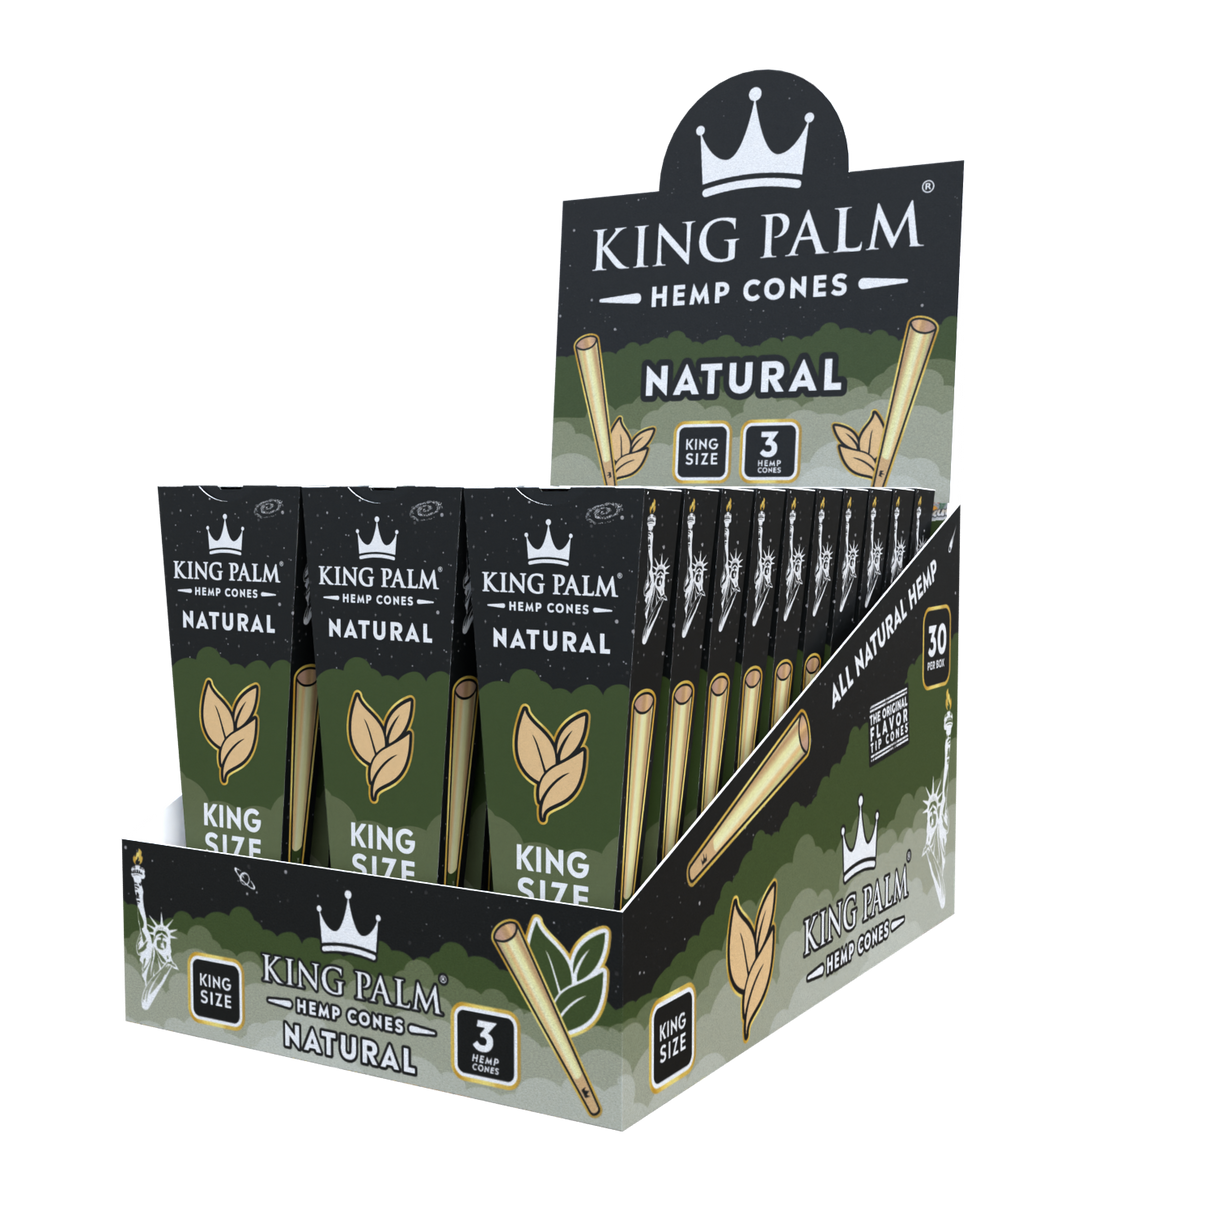 King Palm King Size Hemp Cones 30ct Display – Natural